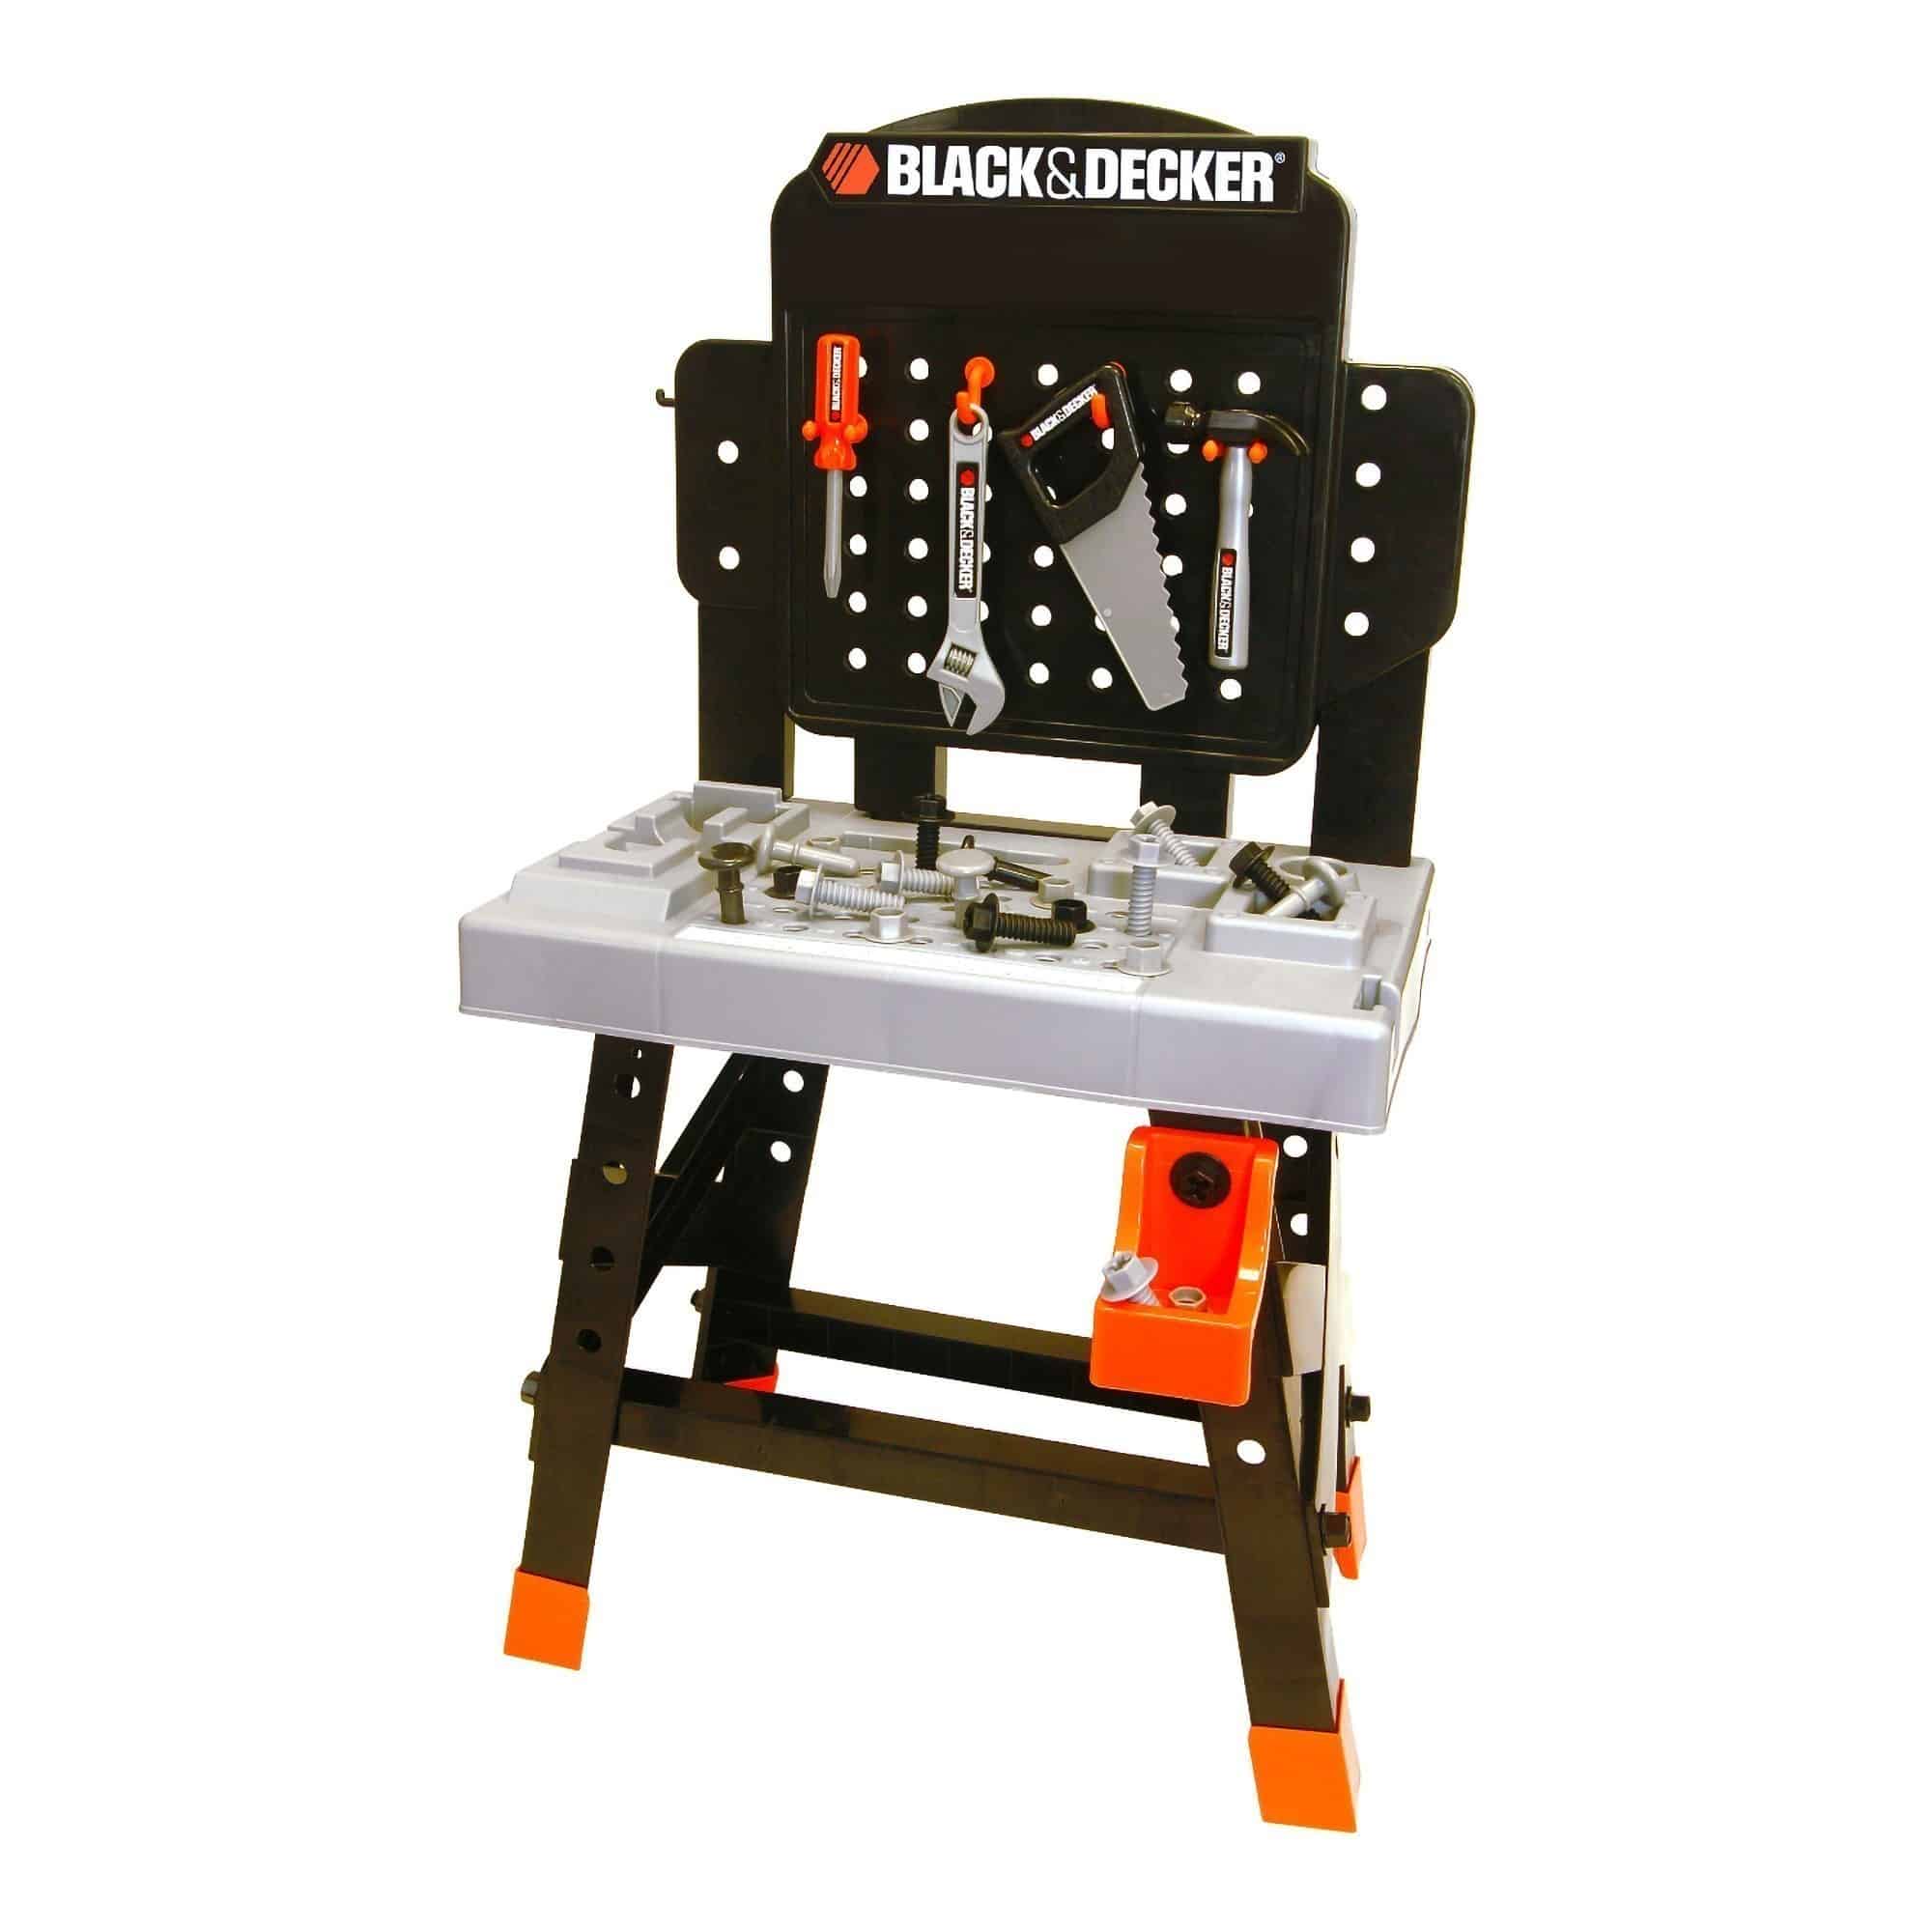 Black & Decker - Ready-To-Build Workbench - 50 Piece